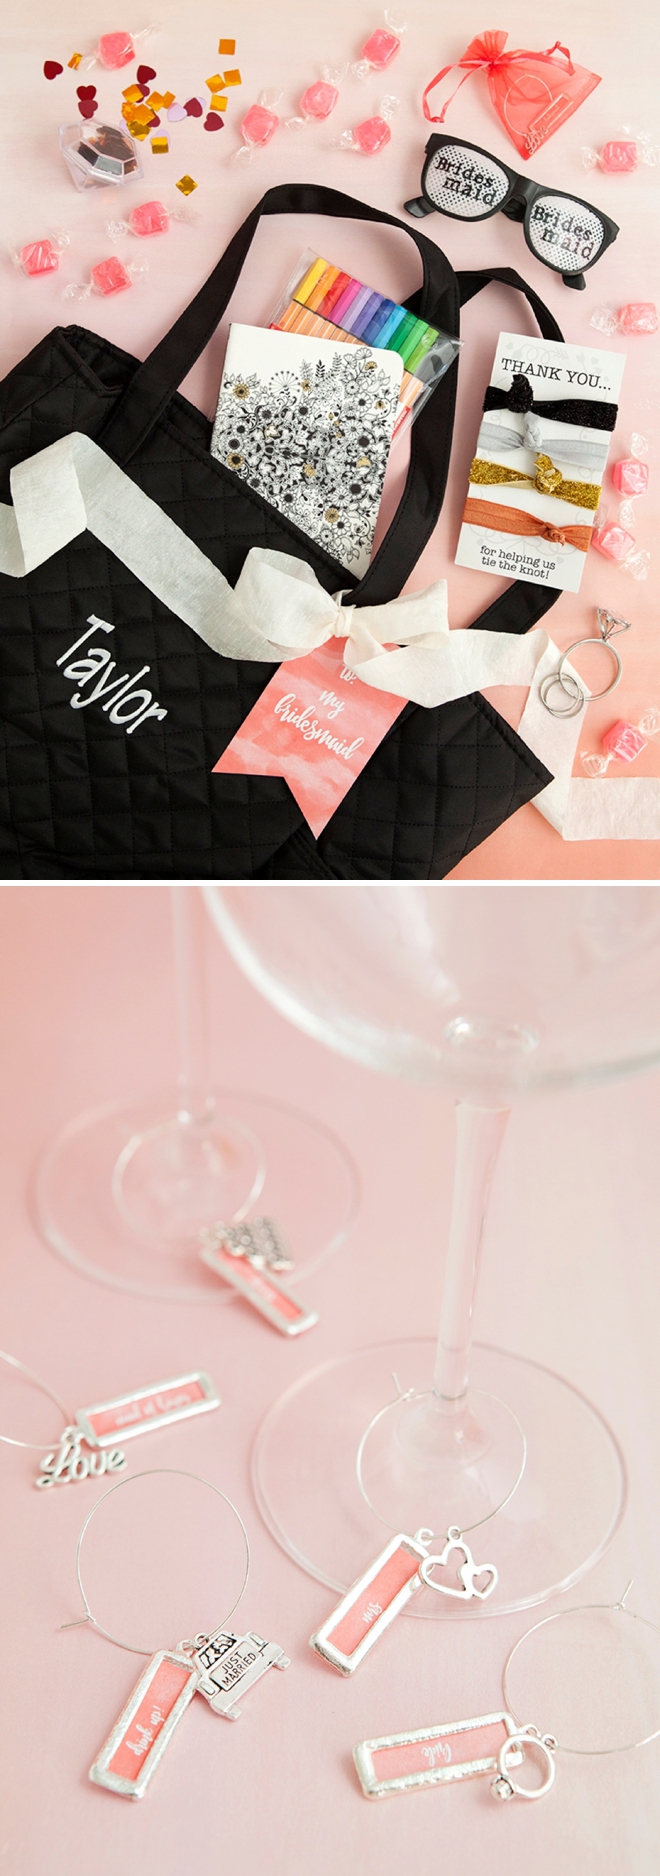 Adorable DIY bridesmaid gift bags with DIY wine charms!